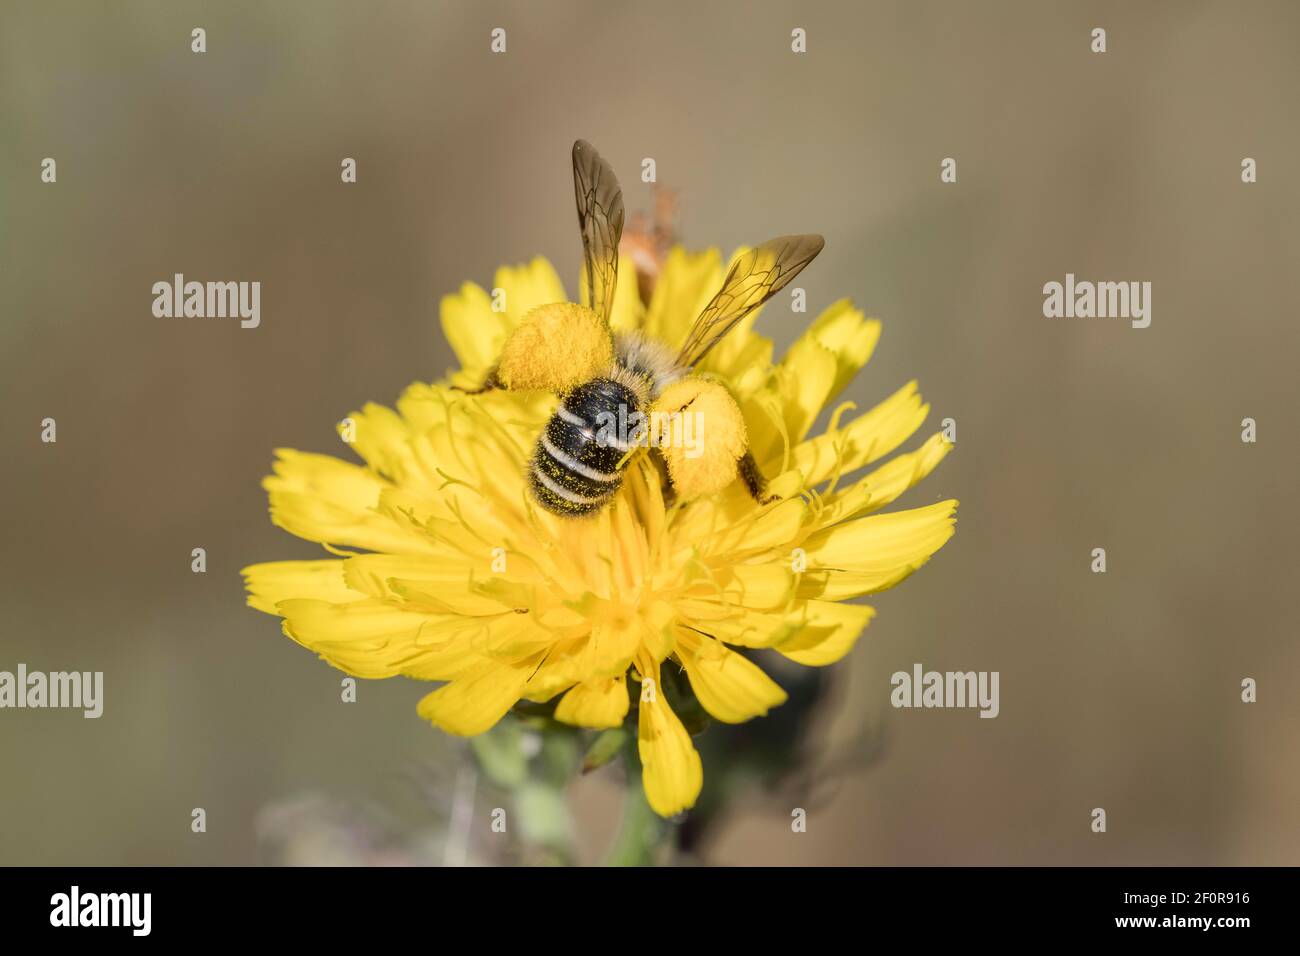 Pantalon bee (Dasypoda hirtipes), female, Lower Saxony, Germany Stock Photo